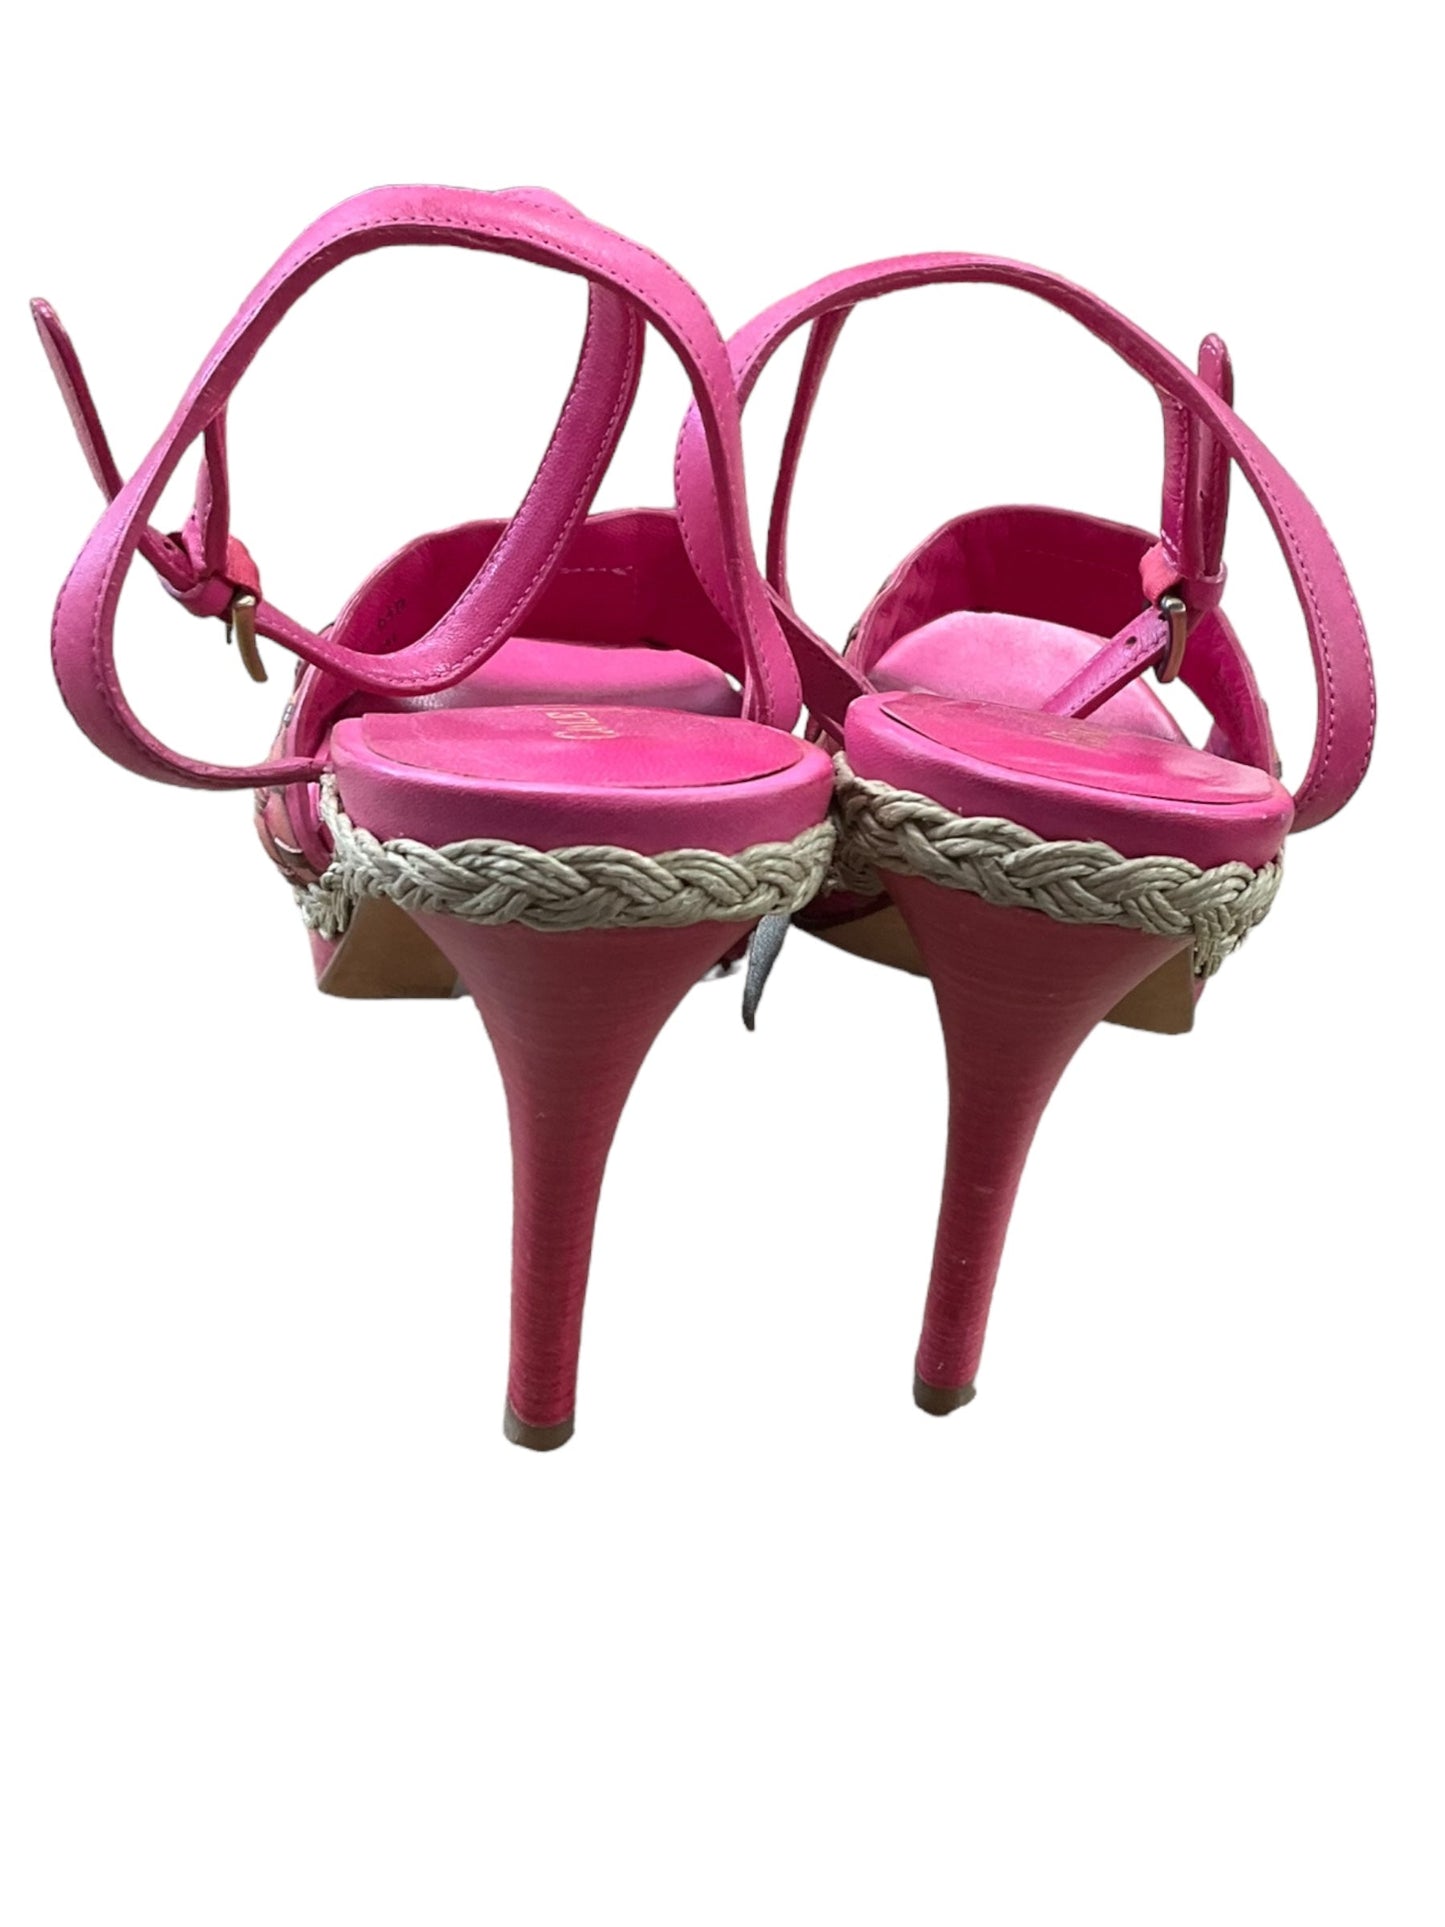 Pink Sandals Heels Stiletto Cole-haan, Size 6.5